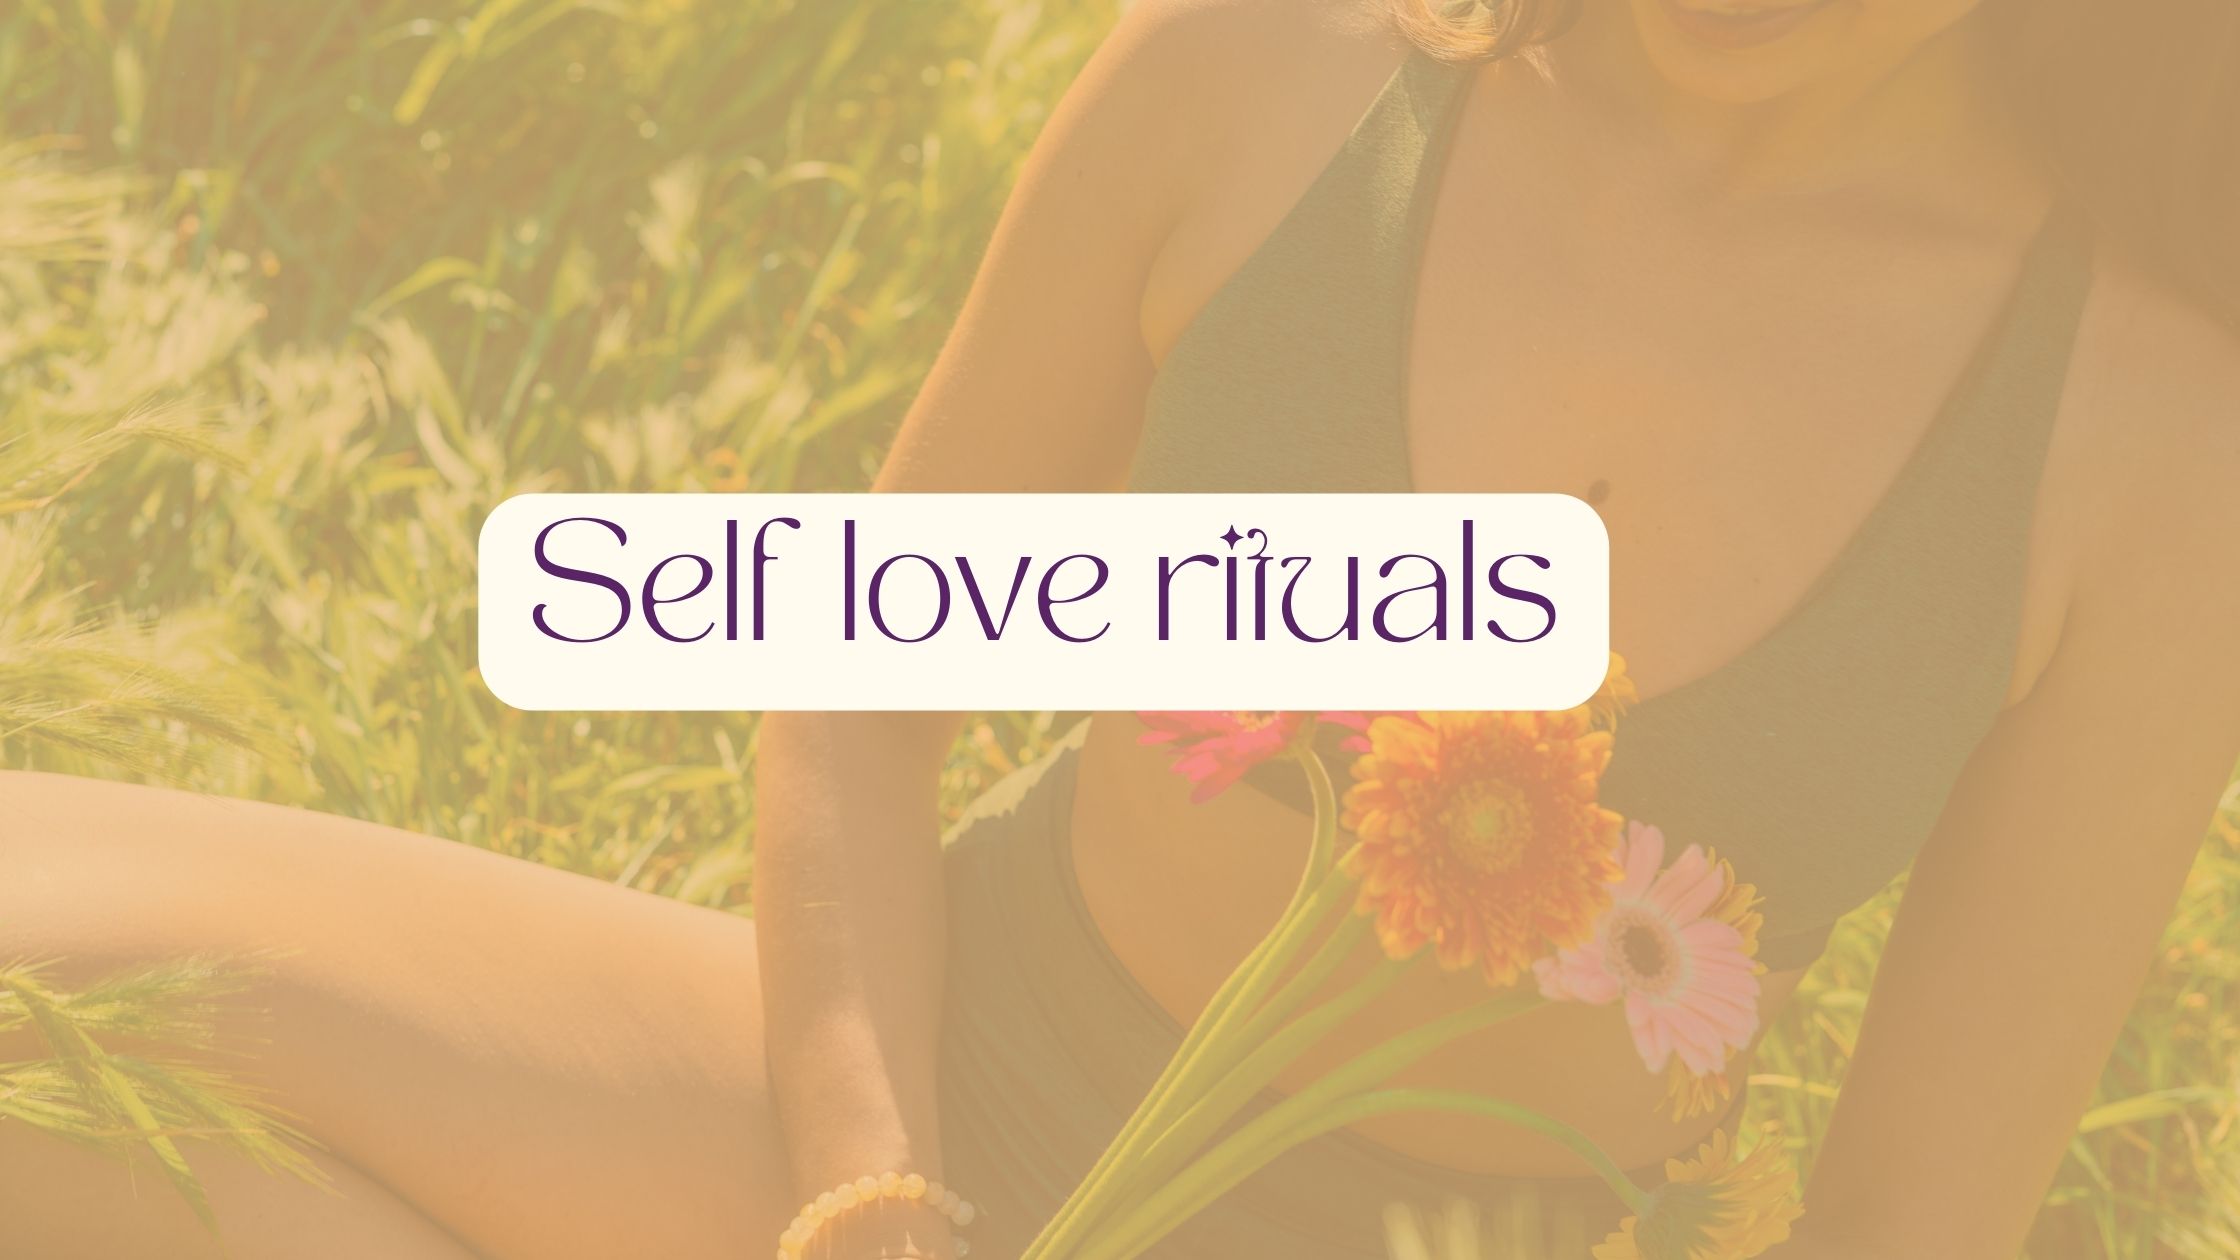 Self love rituals, self-care, wellbeing